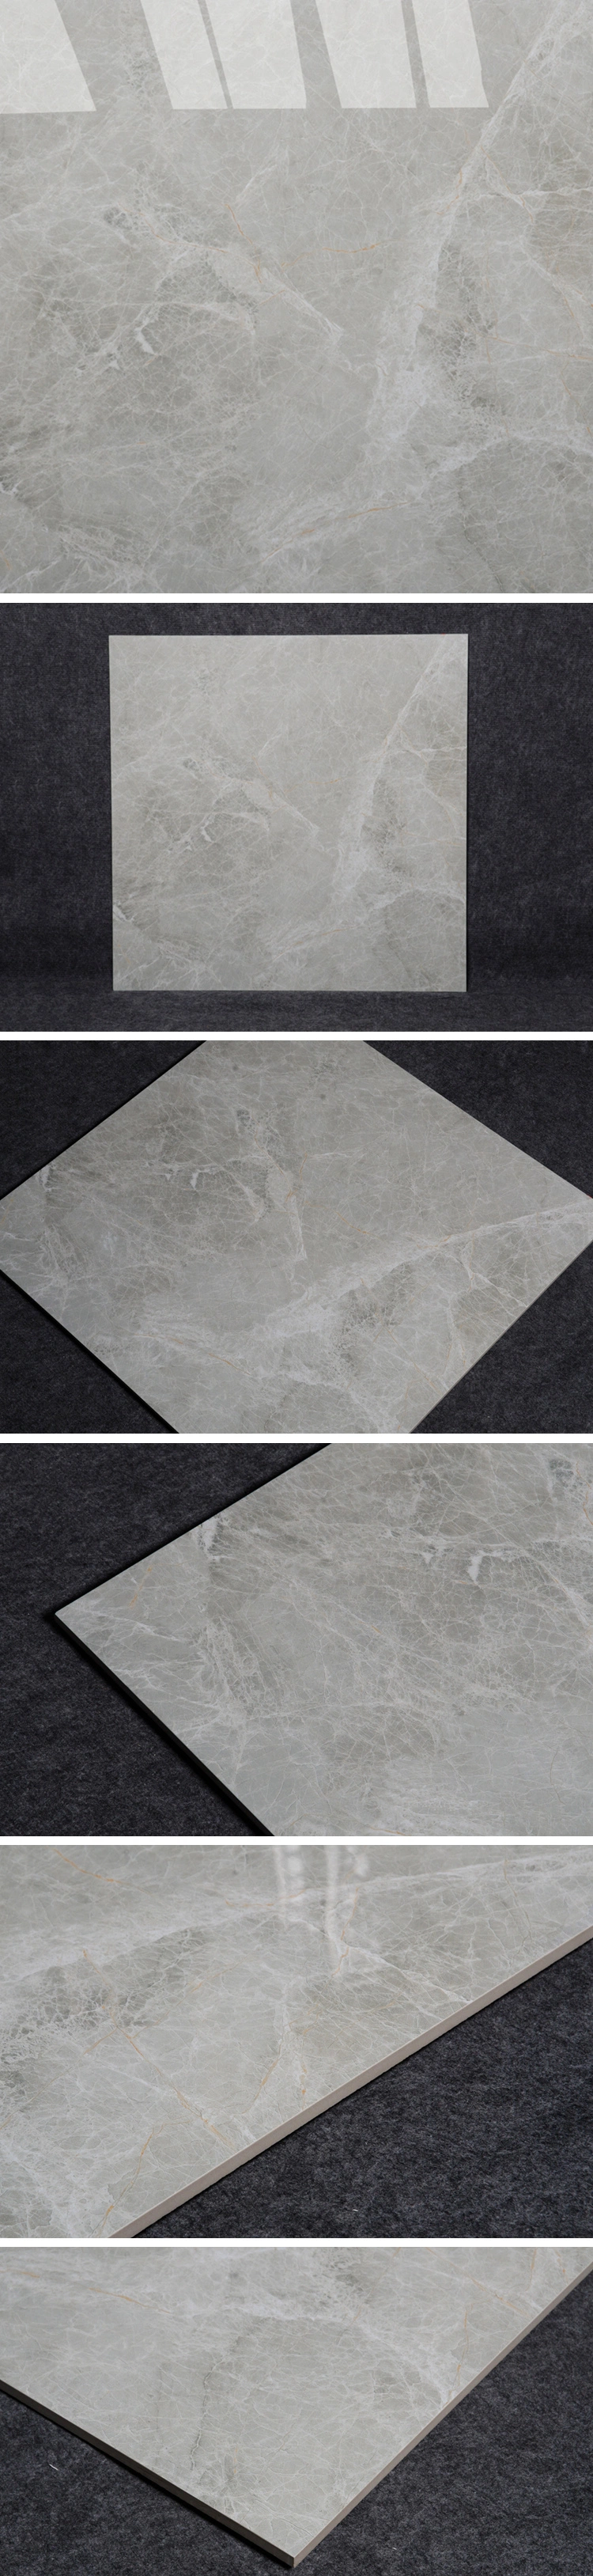 Foshan Top Quality Living Room Porcelain Glazed Marble Tiles Floors 600X600mm Selections Grey Ceramic Floor Tile